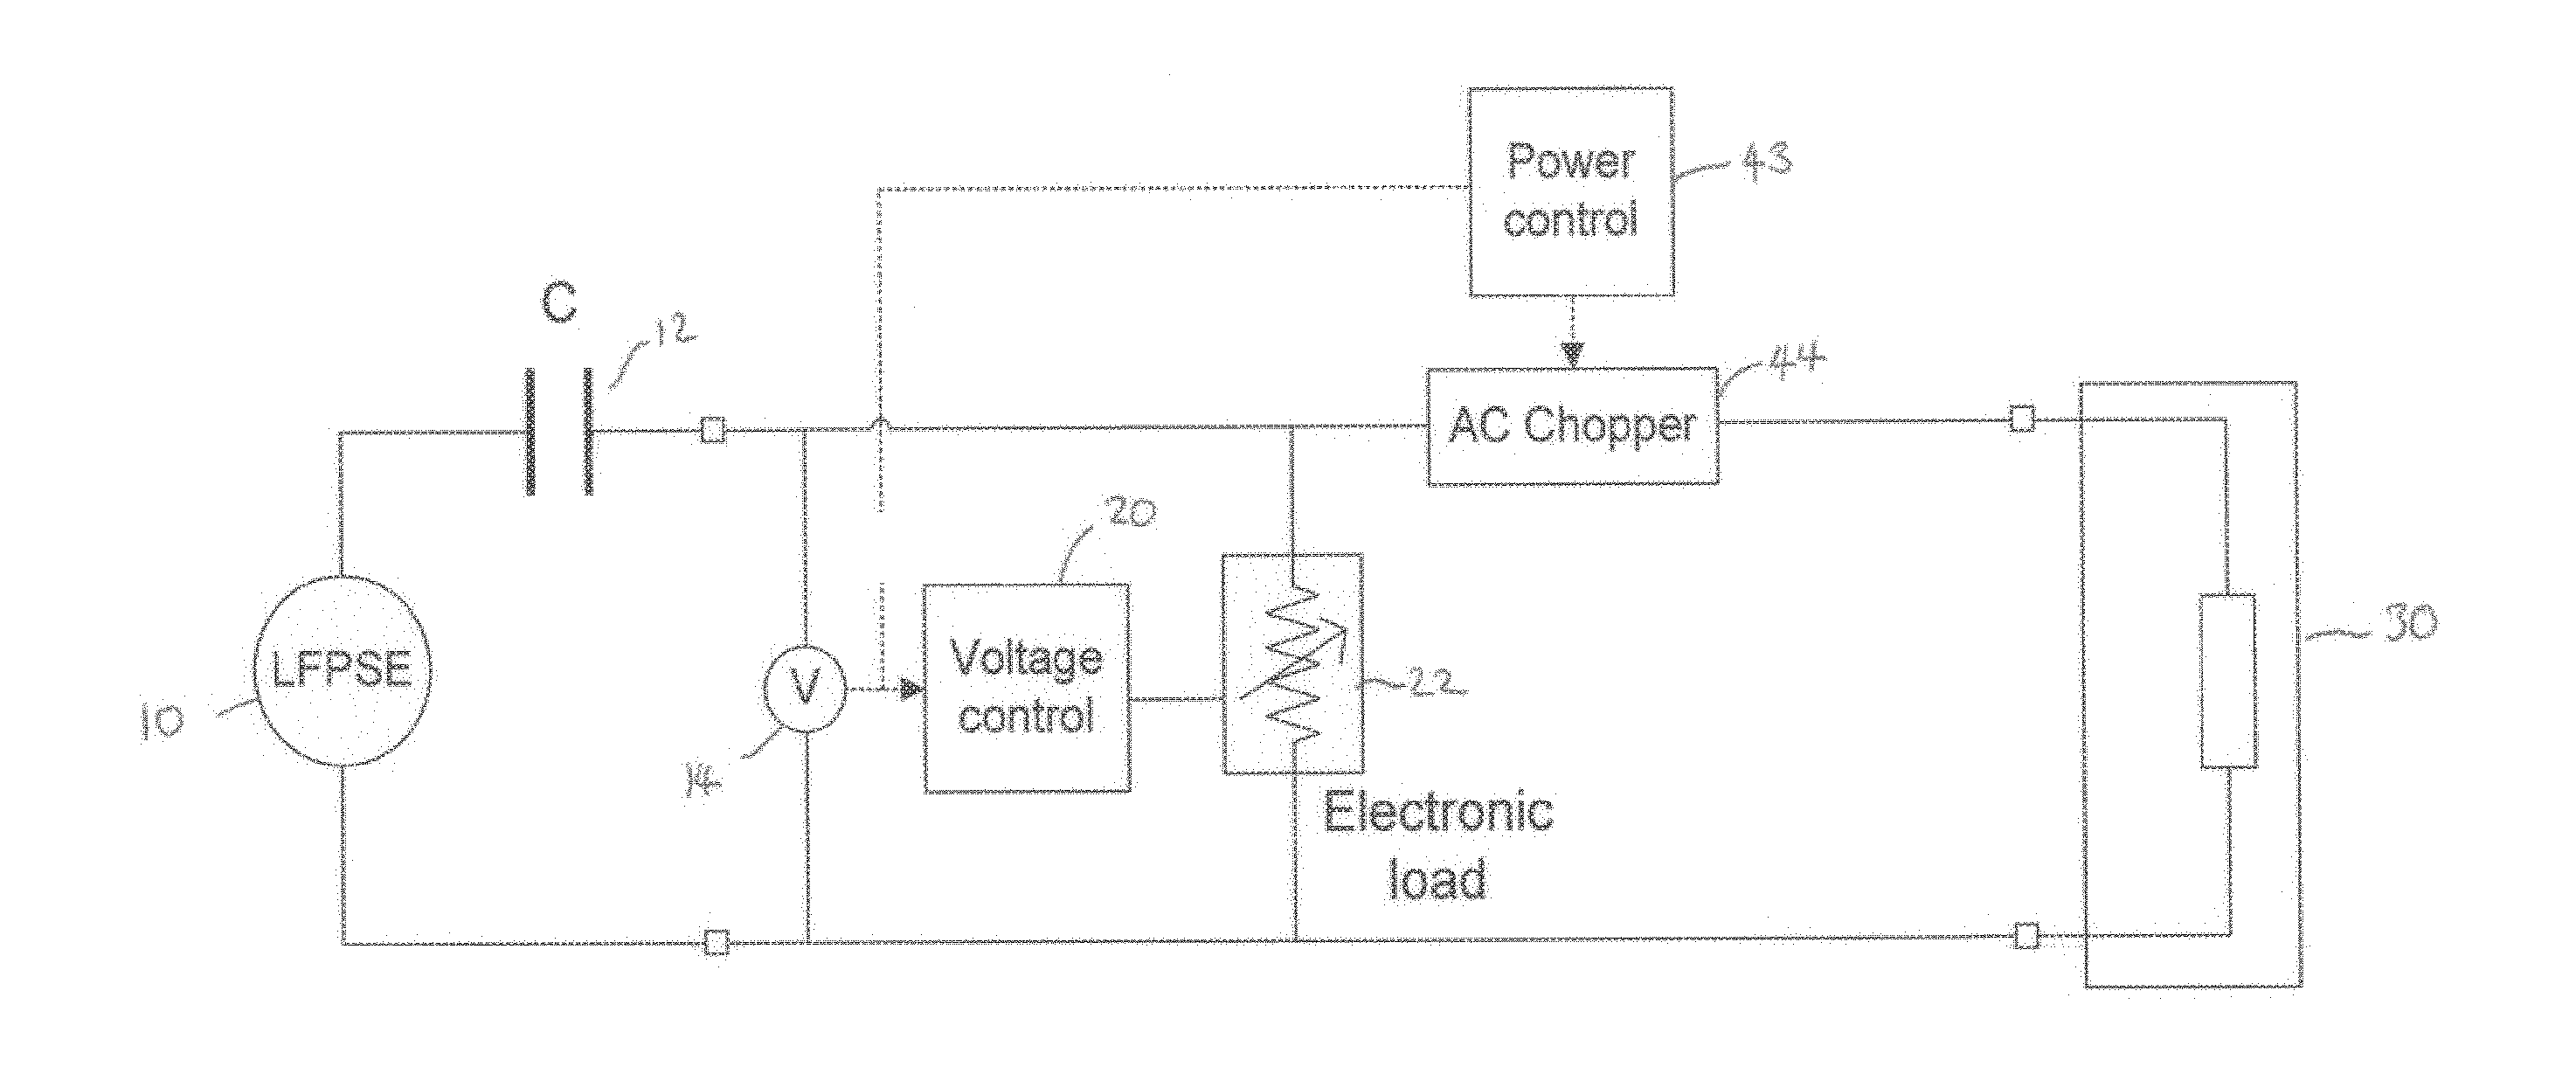 Regulation of electrical generator output